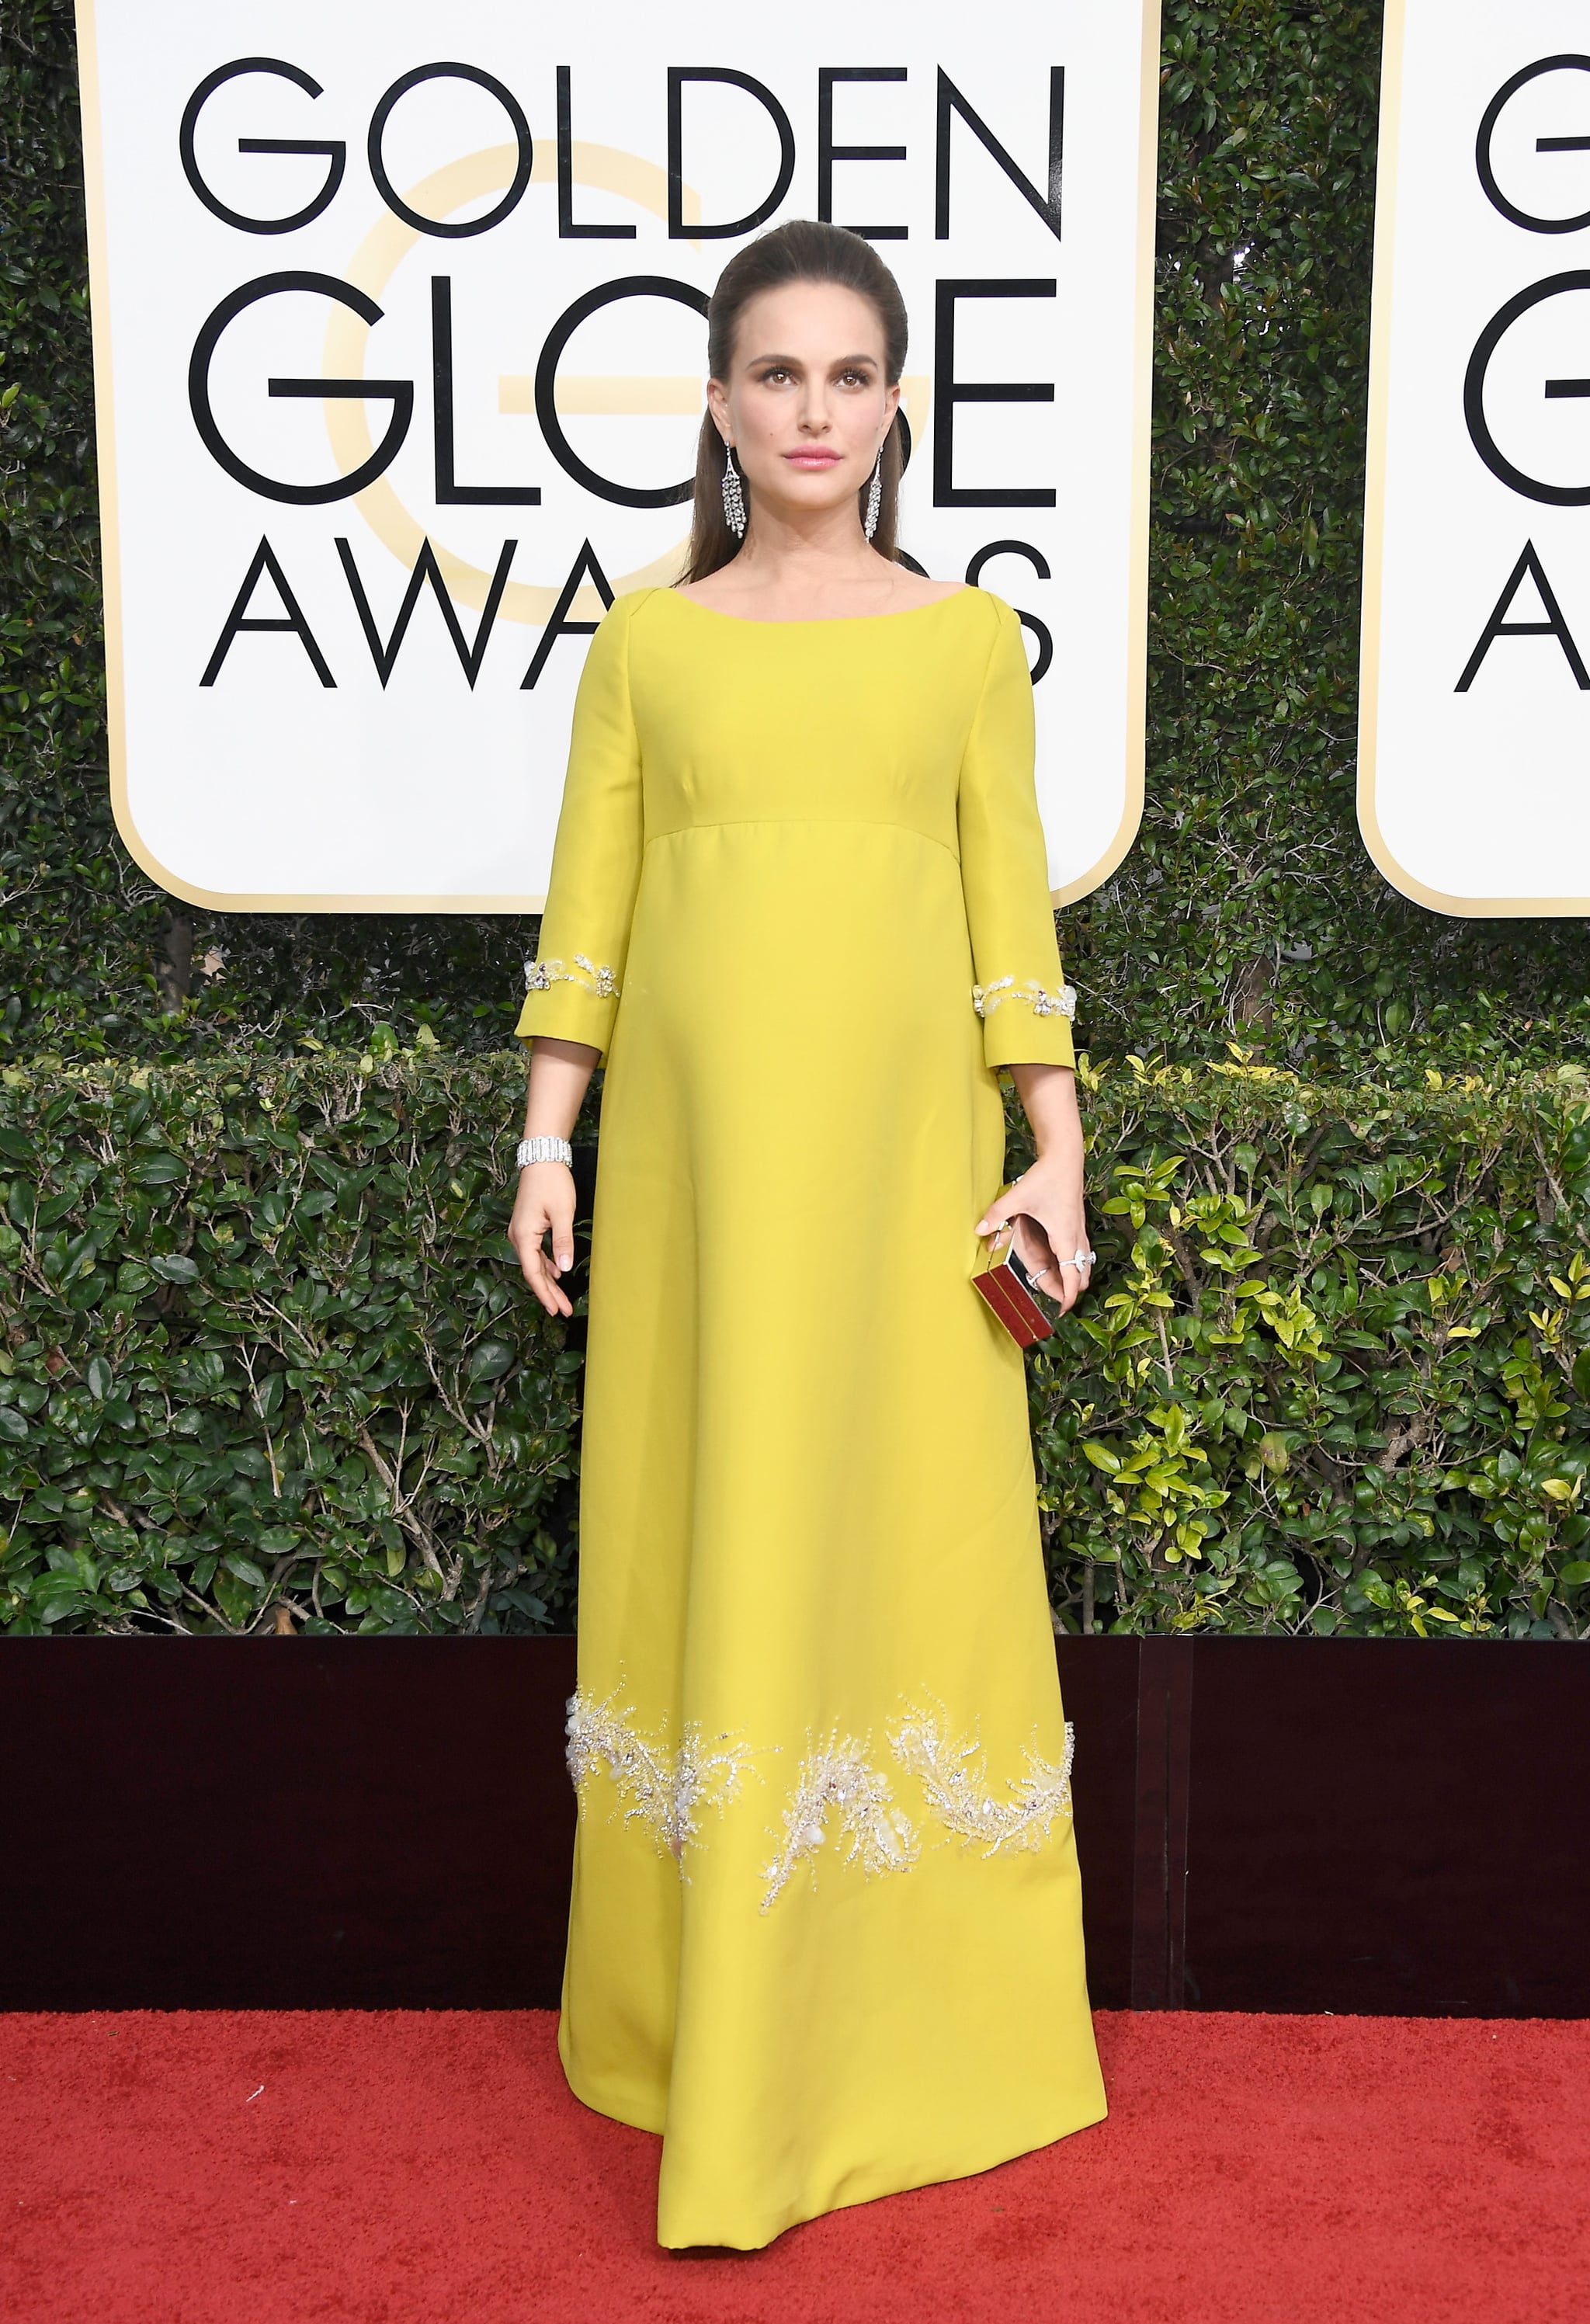 Natalie Portman Prada Dress Golden Globe Awards 2017 | POPSUGAR Fashion